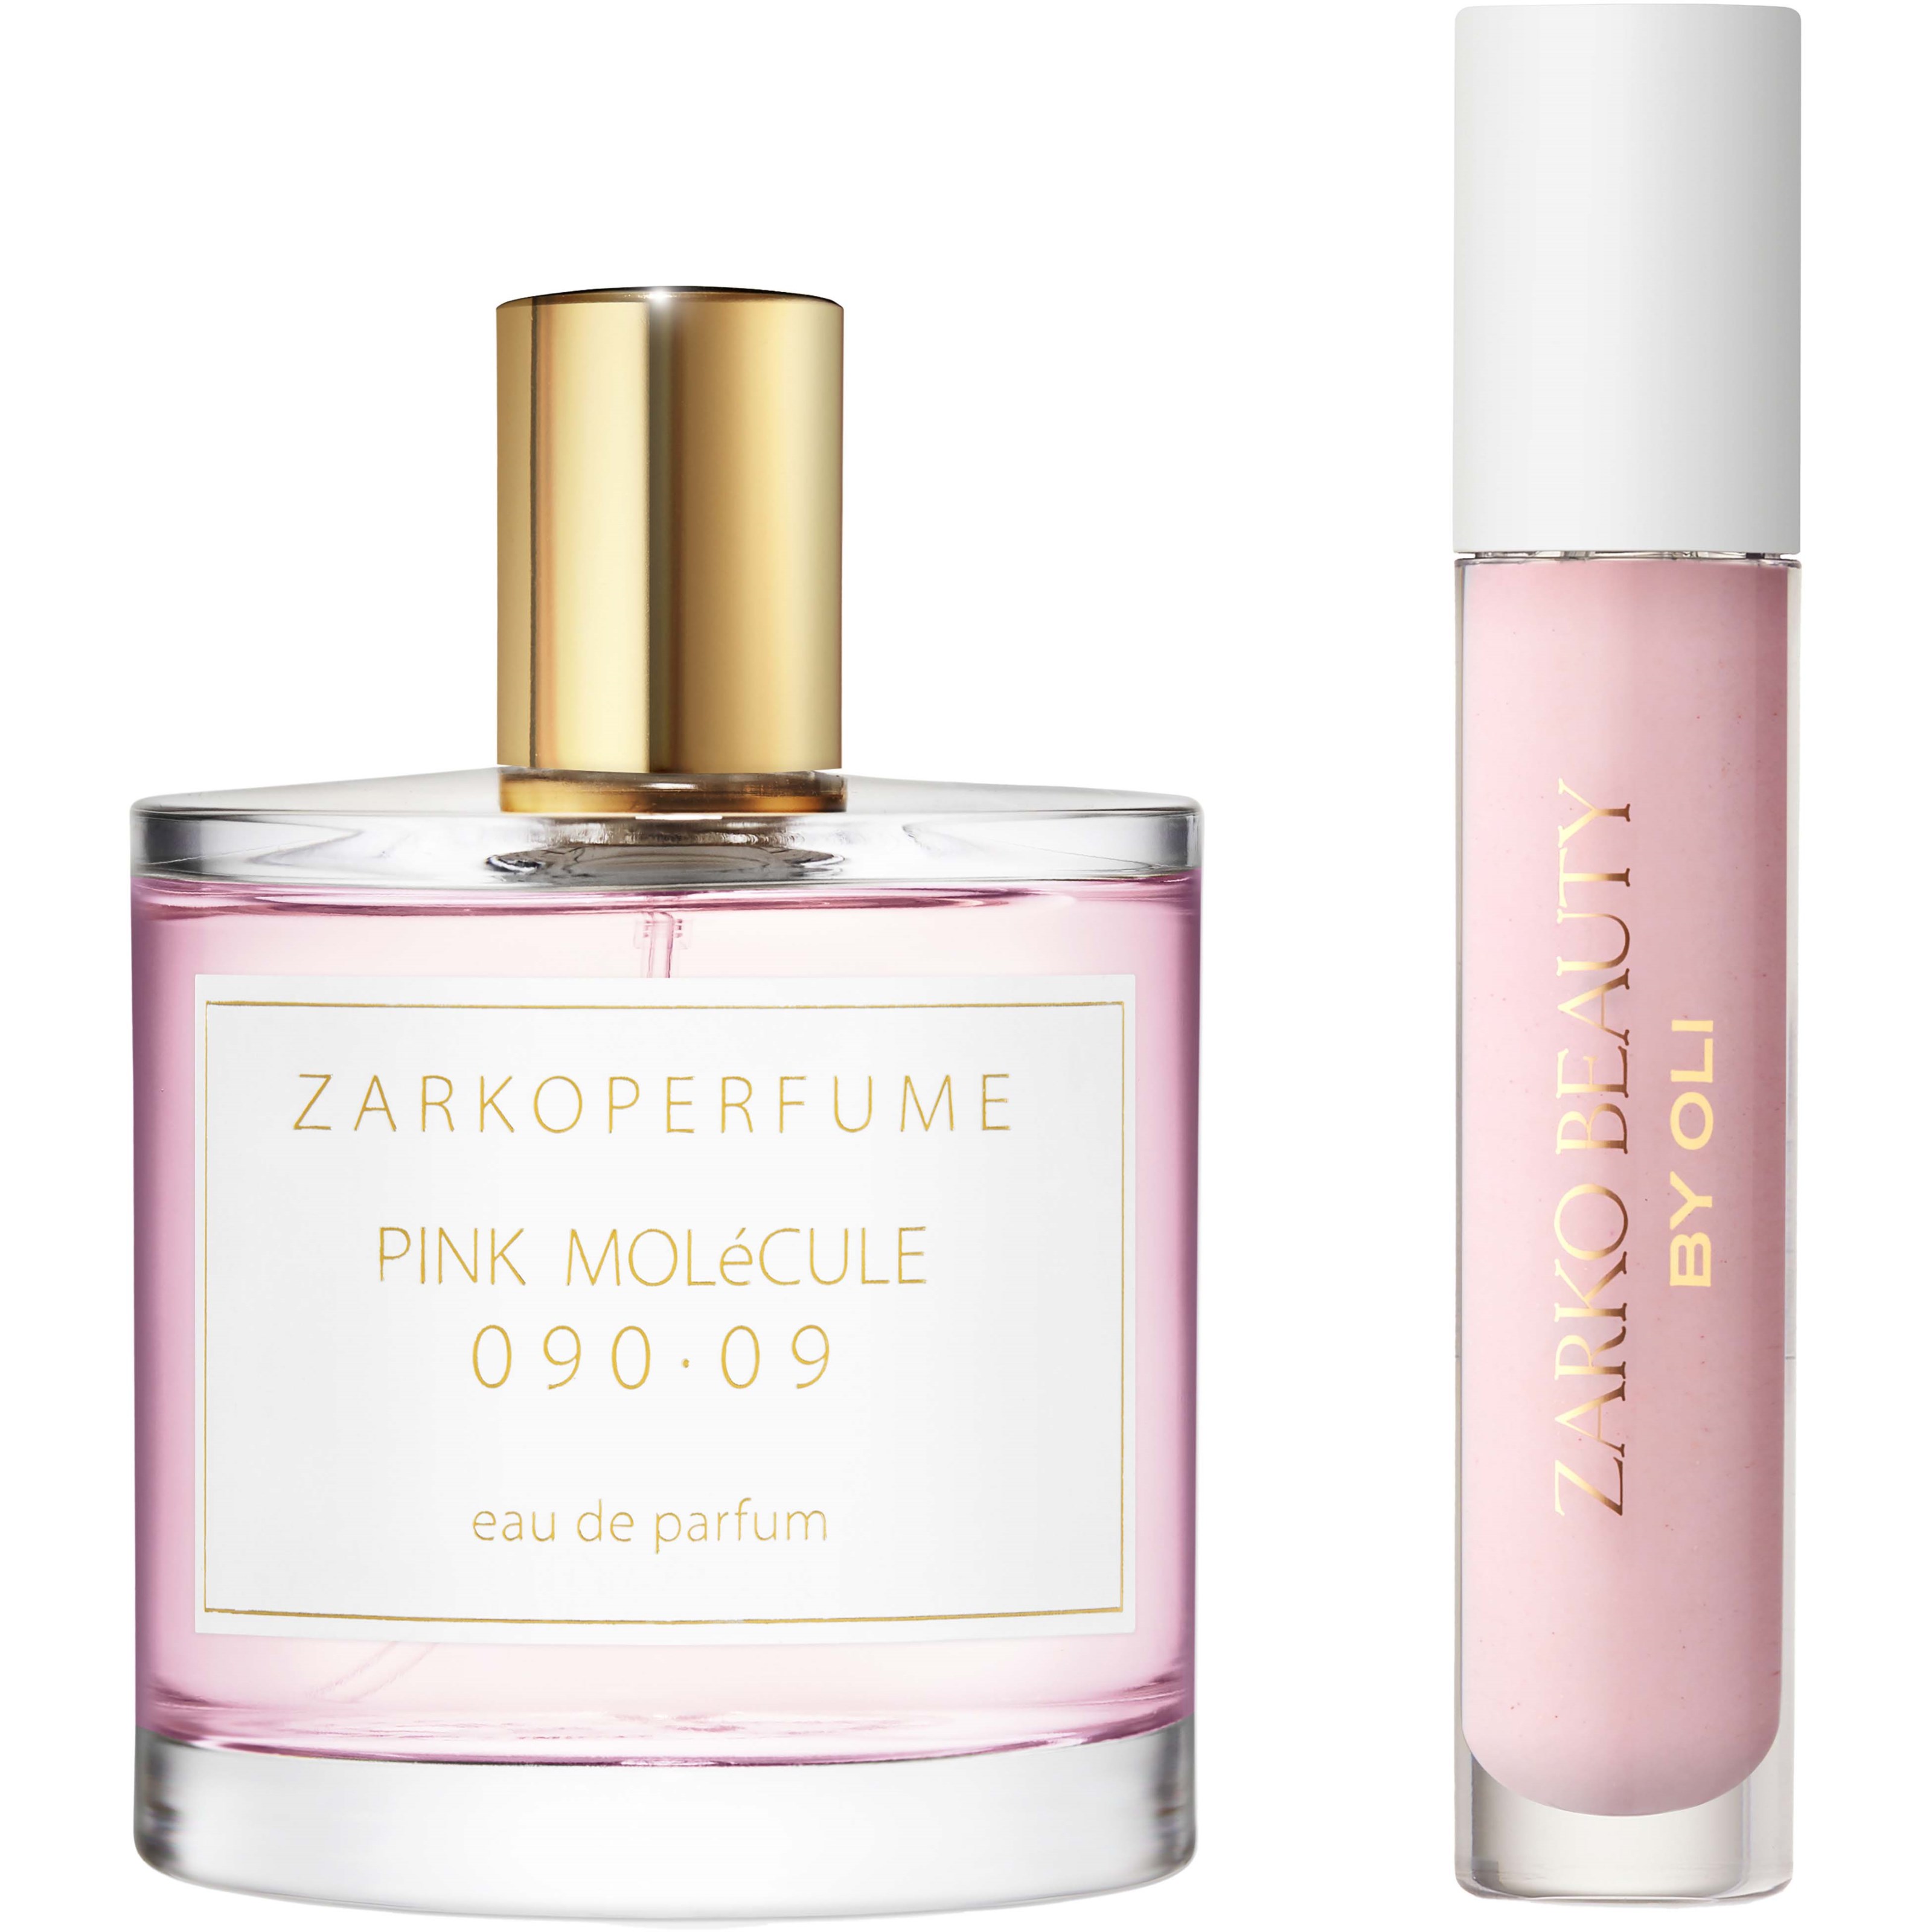 Bilde av Zarkoperfume Pretty In Pink Gift Set